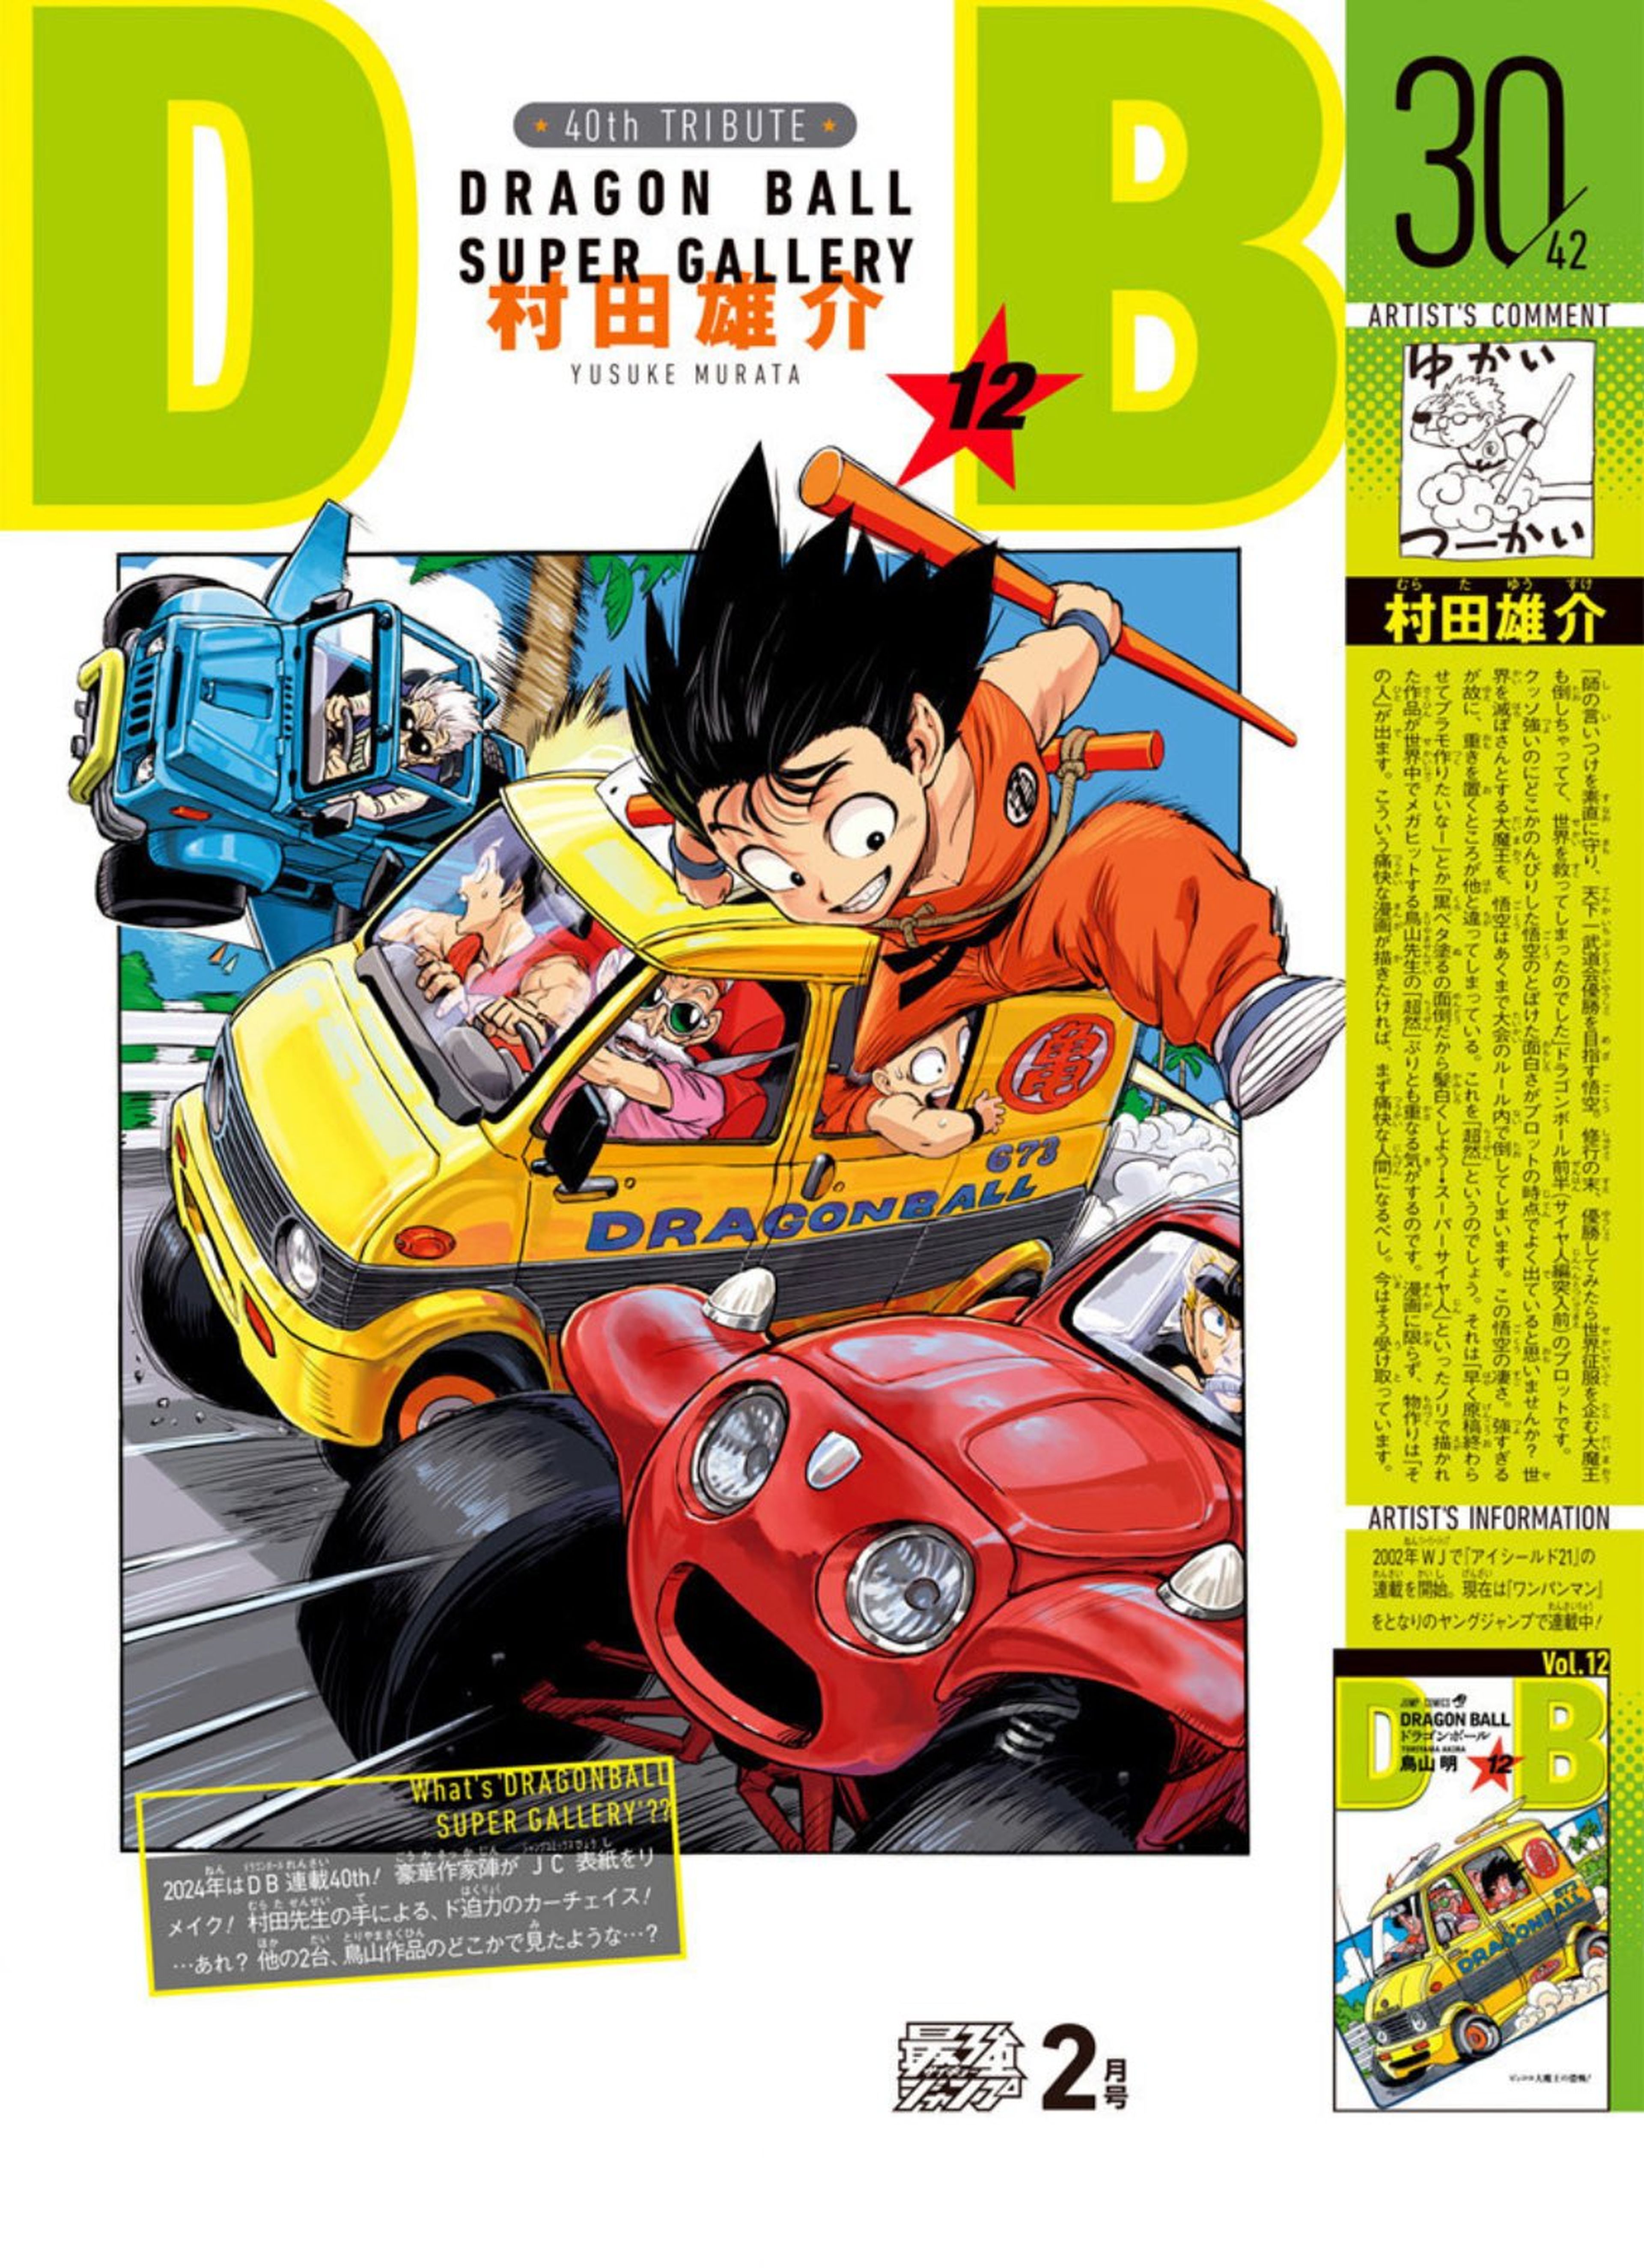 Dragon Ball - Yusuke Murata, dibujante de One Punch Man, dibuja una preciosa portada de la Saga de Piccolo Daimaoh